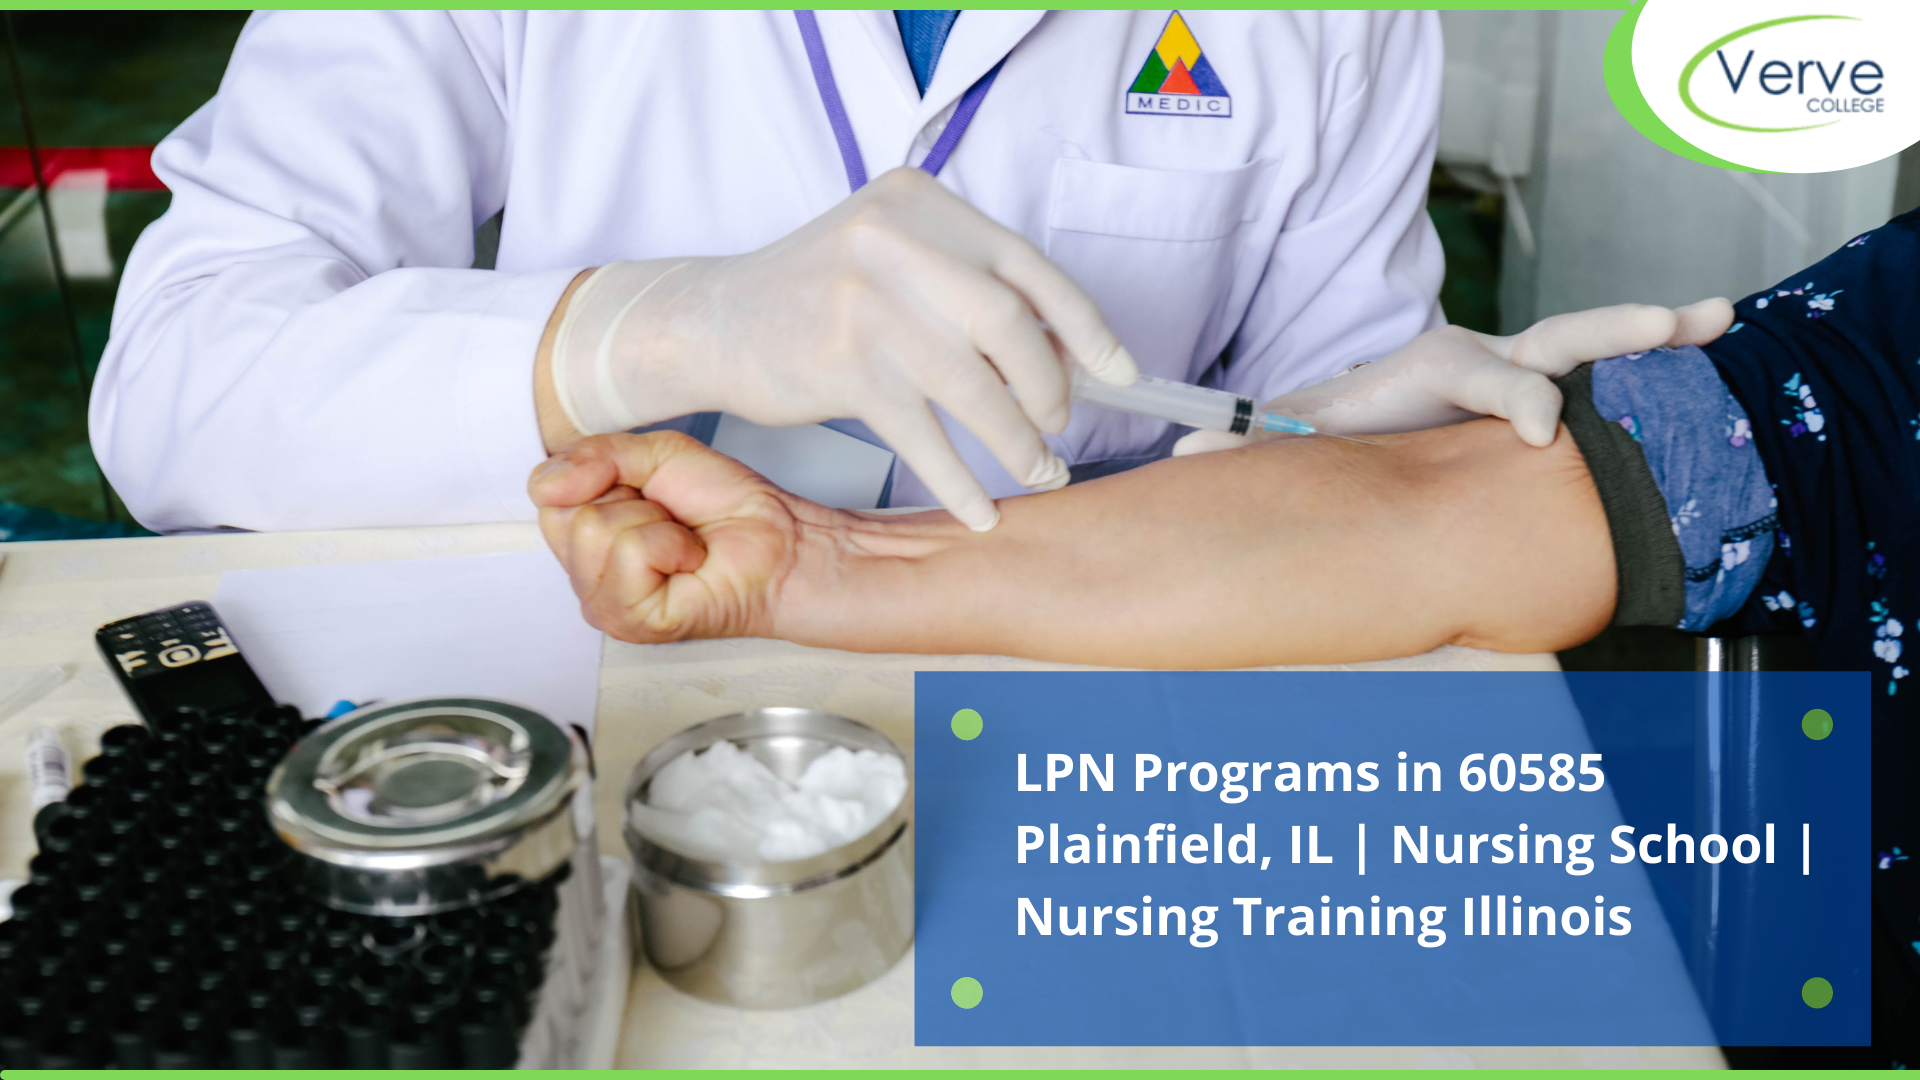 LPN Programs in 60585 Plainfield, IL | Nursing School | Nursing Training Illinois